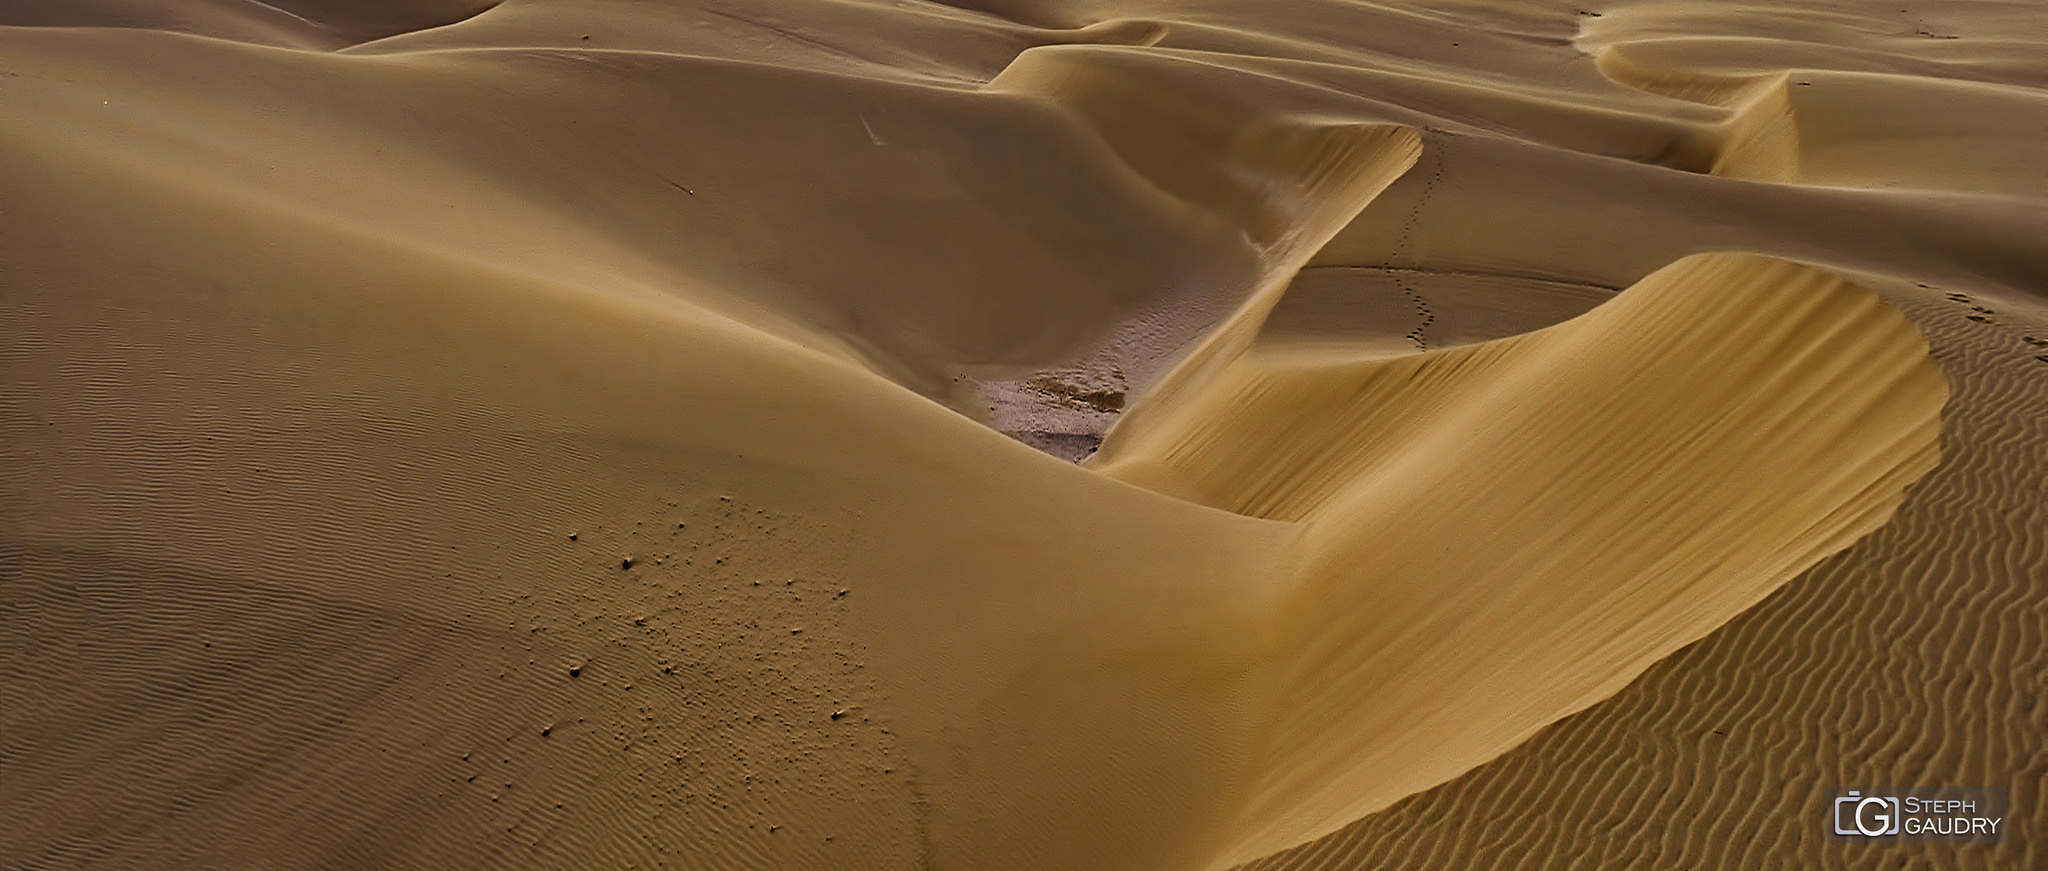 Boa Vista - du sable à perte de vue [Klik om de diavoorstelling te starten]